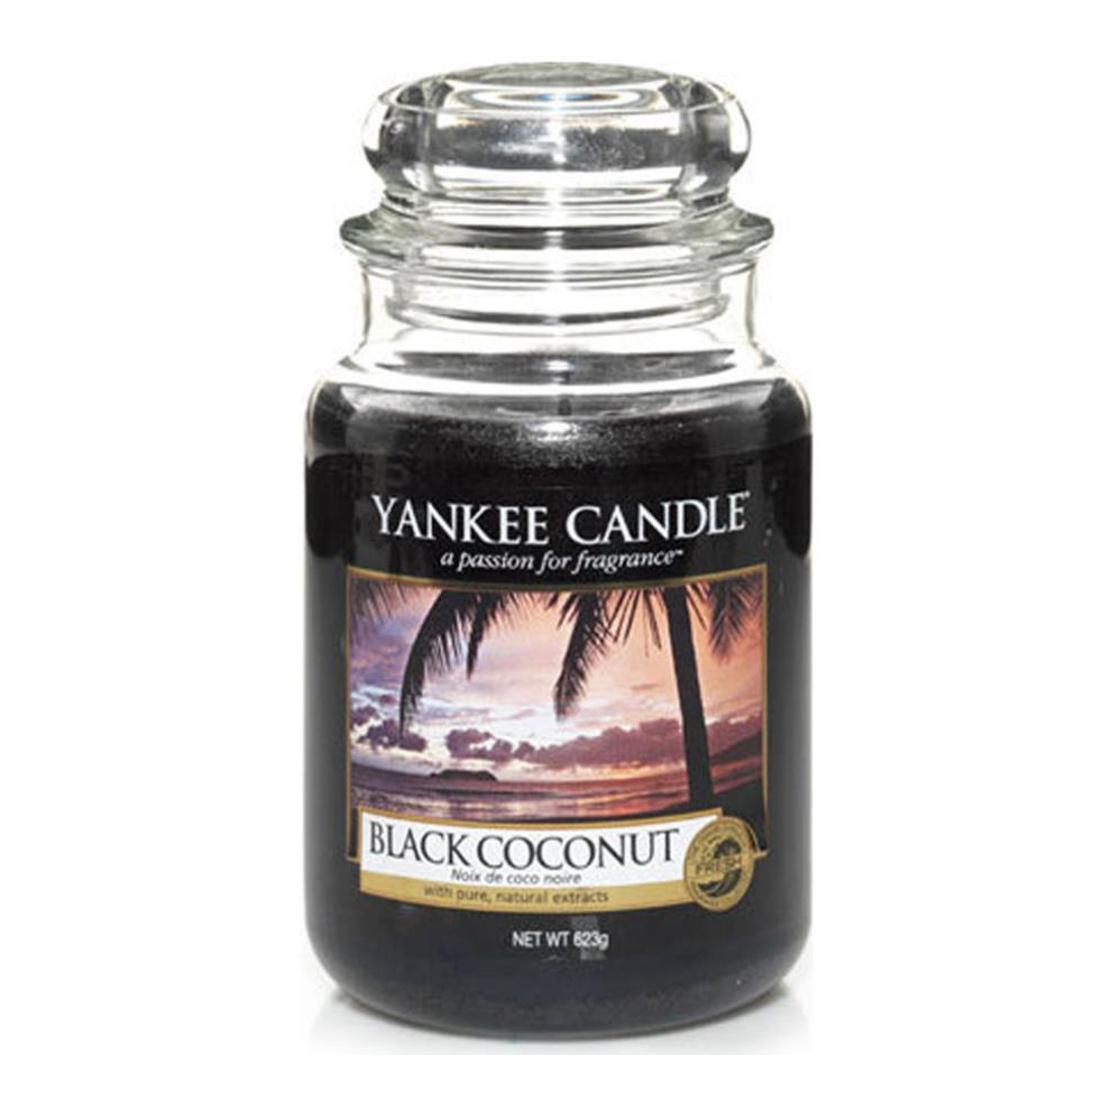 Yankee Candle Black Coconut Large Jar